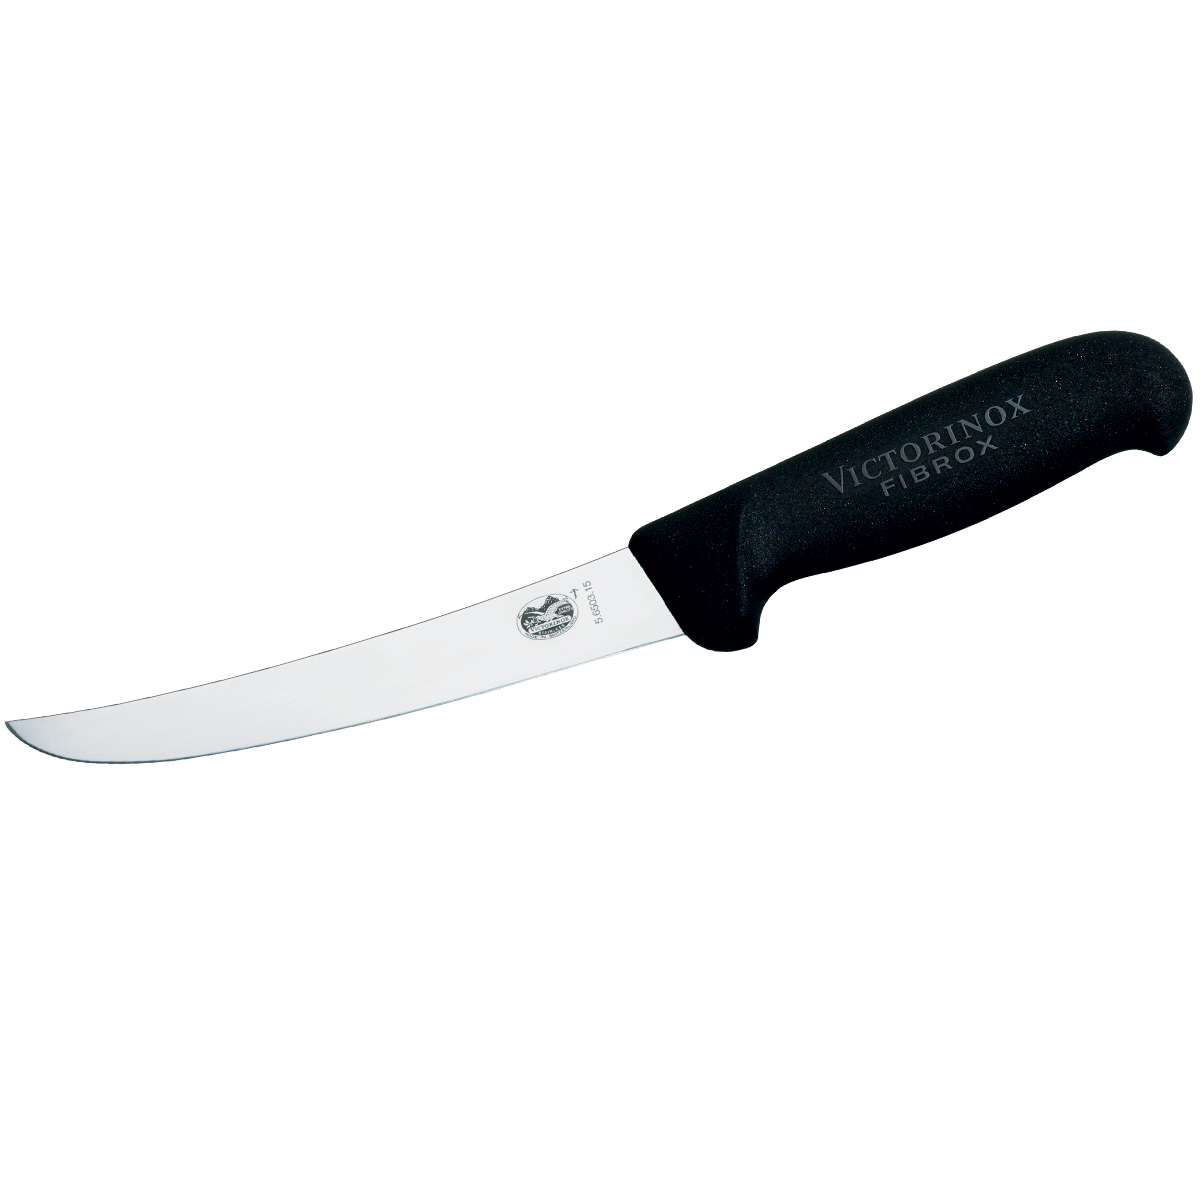 Victorinox Boning Knife, 15cm (6) - Curved, Wide Blade - Black